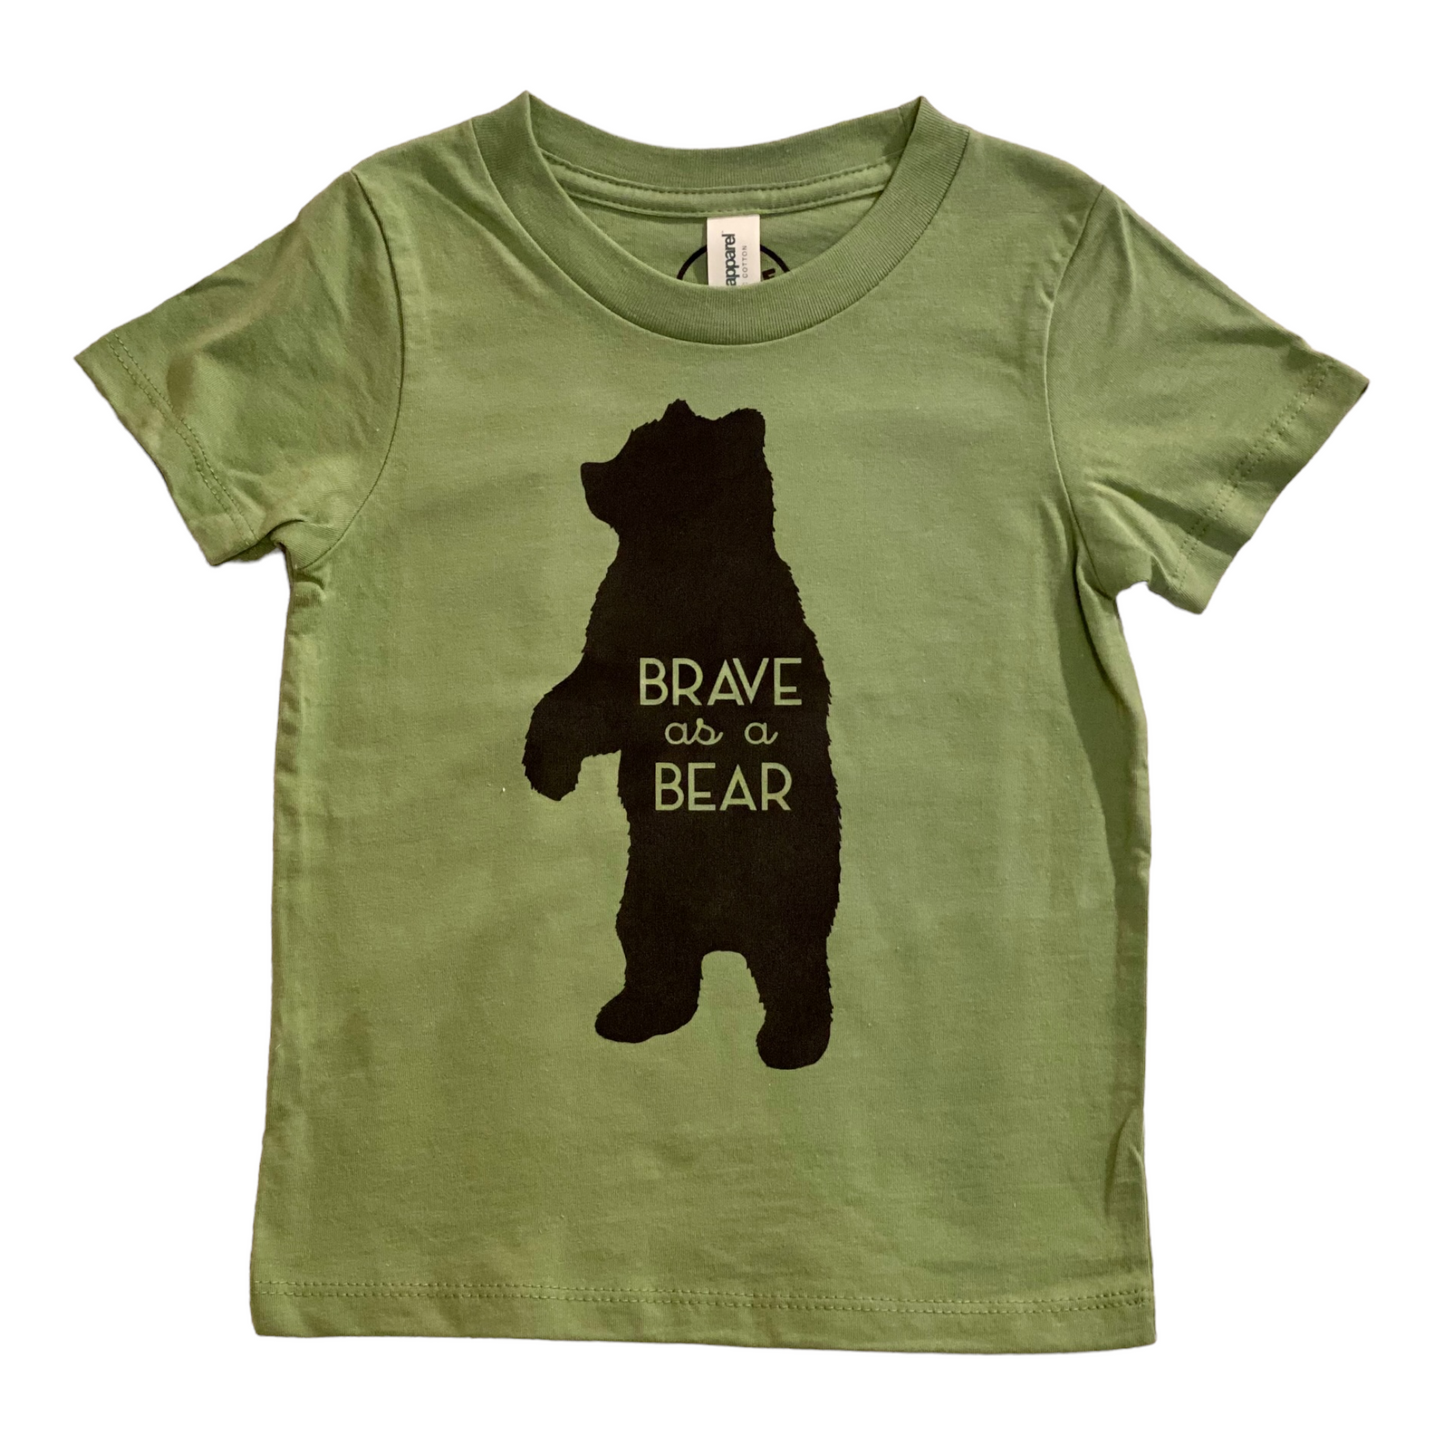 "Brave as a Bear" Toddler Tee